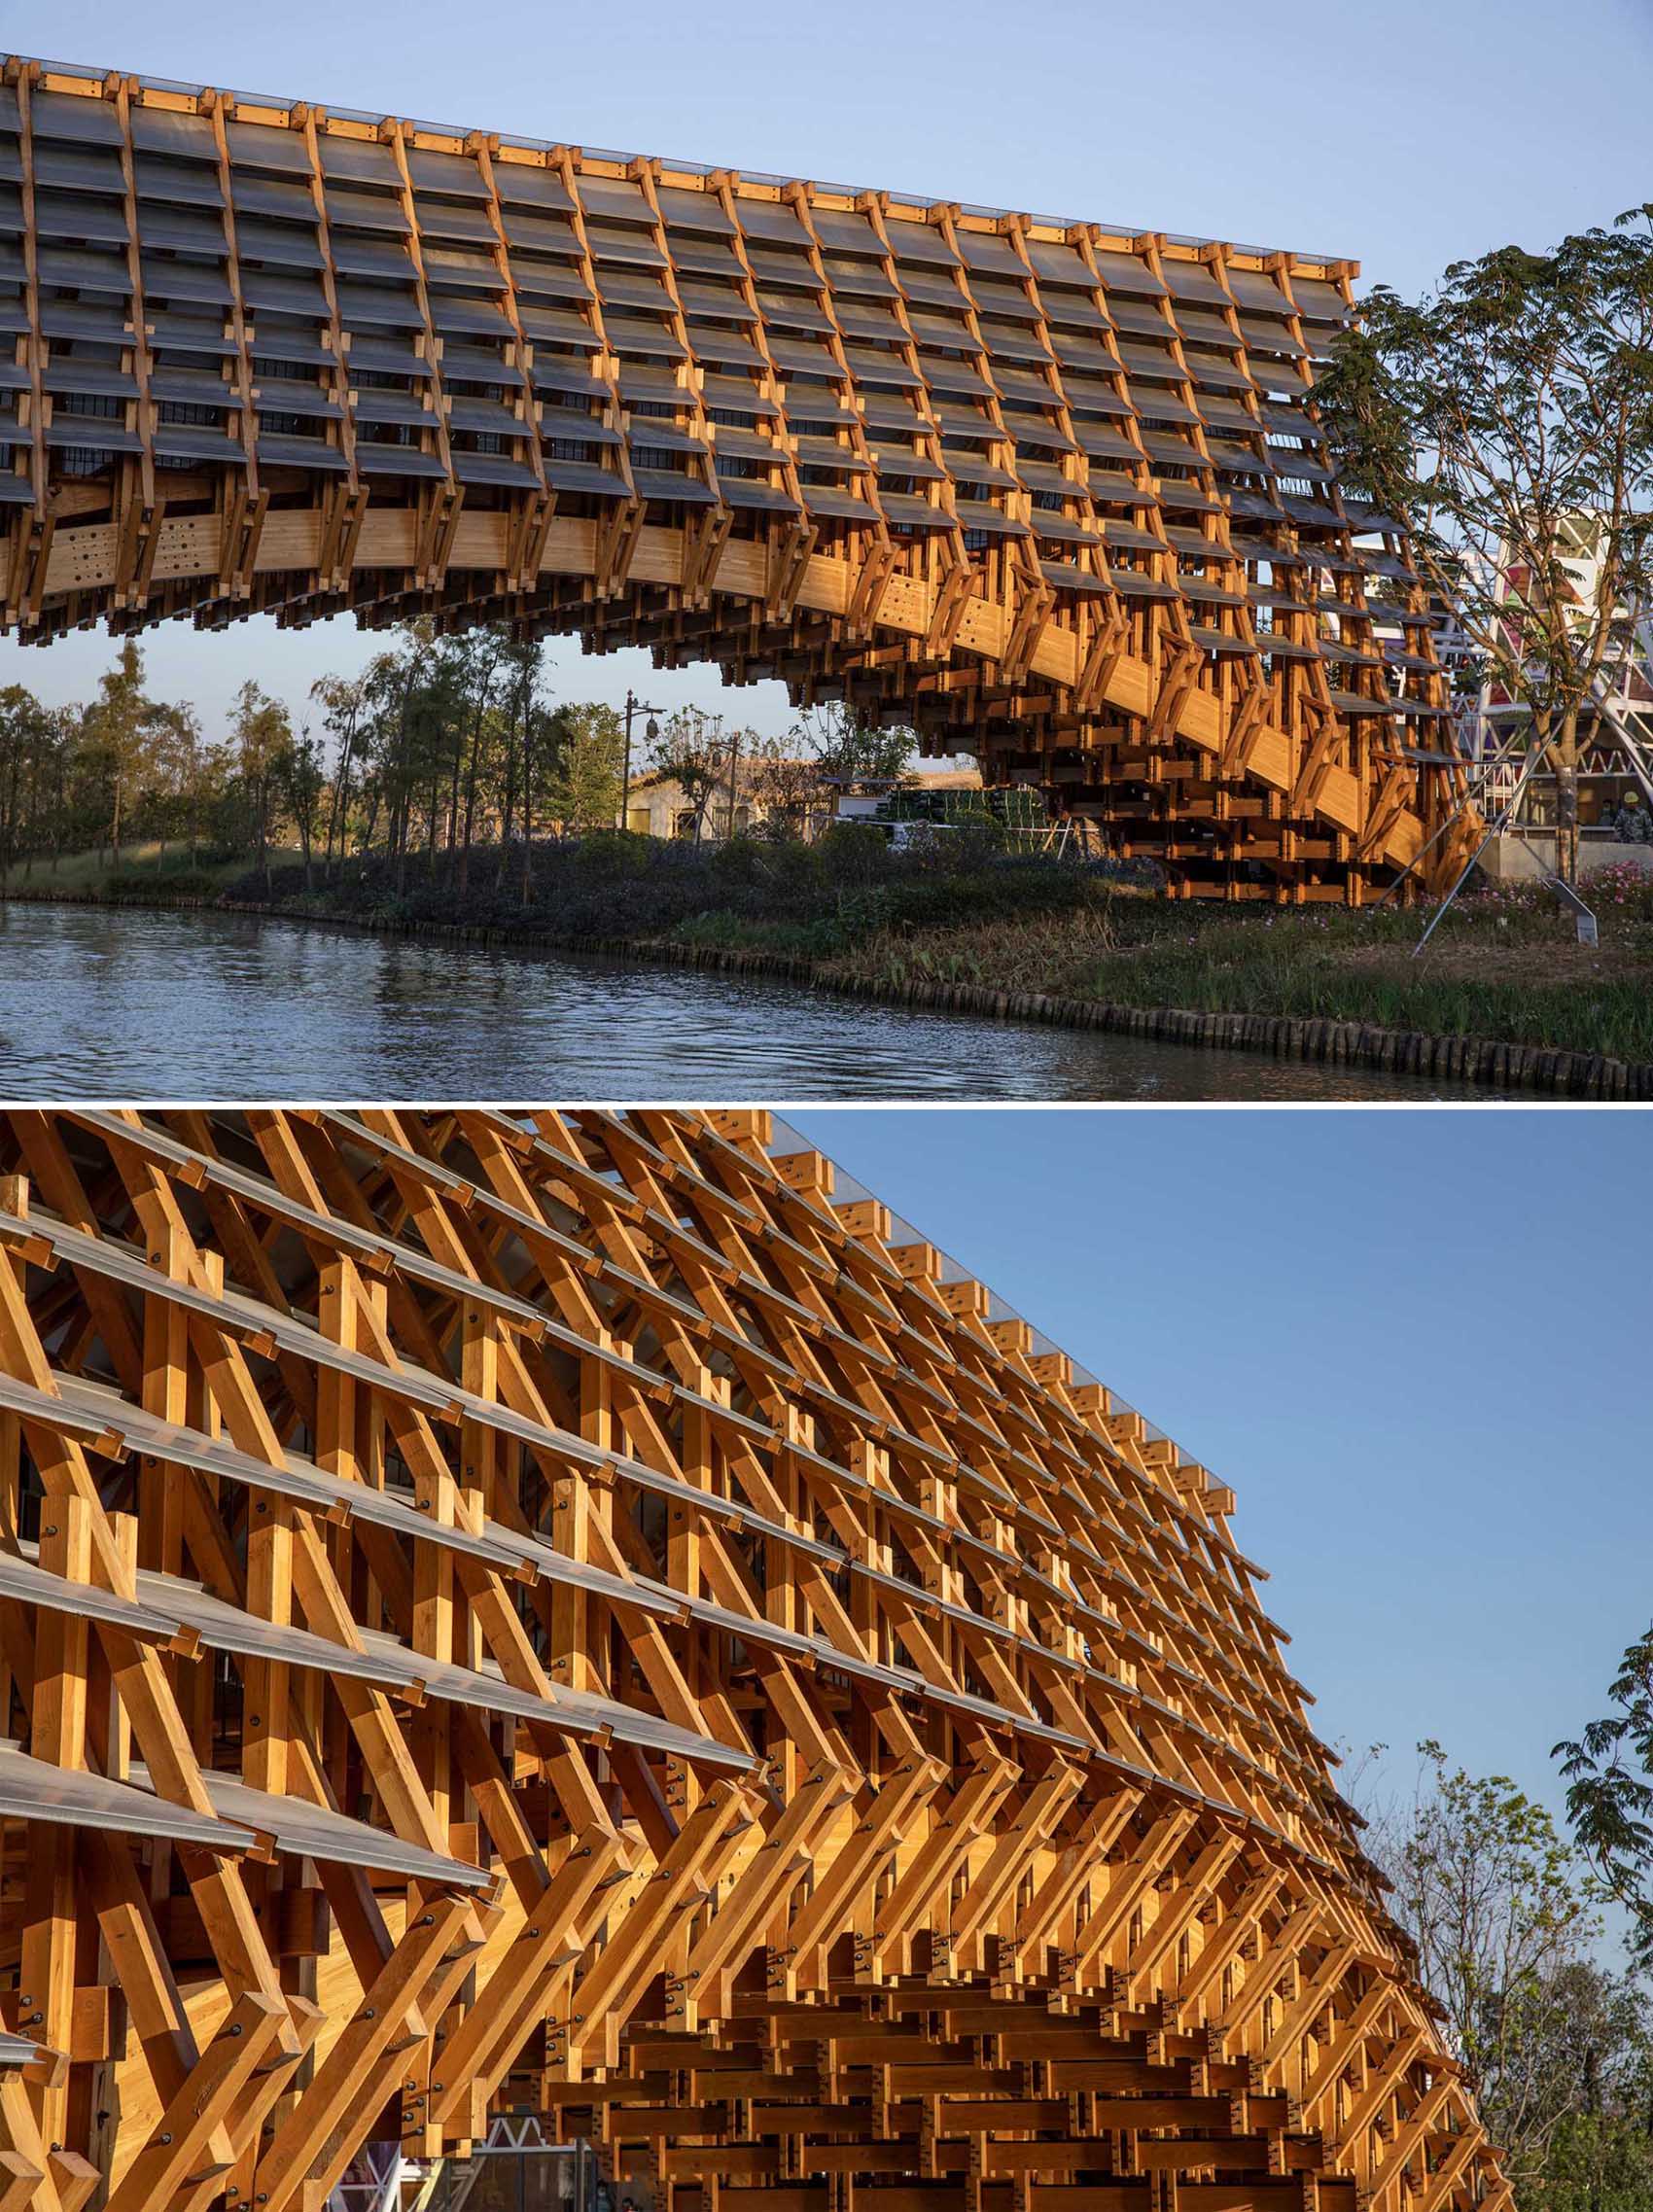 A modern pedestrian bridge made from wood, metal, and glass.